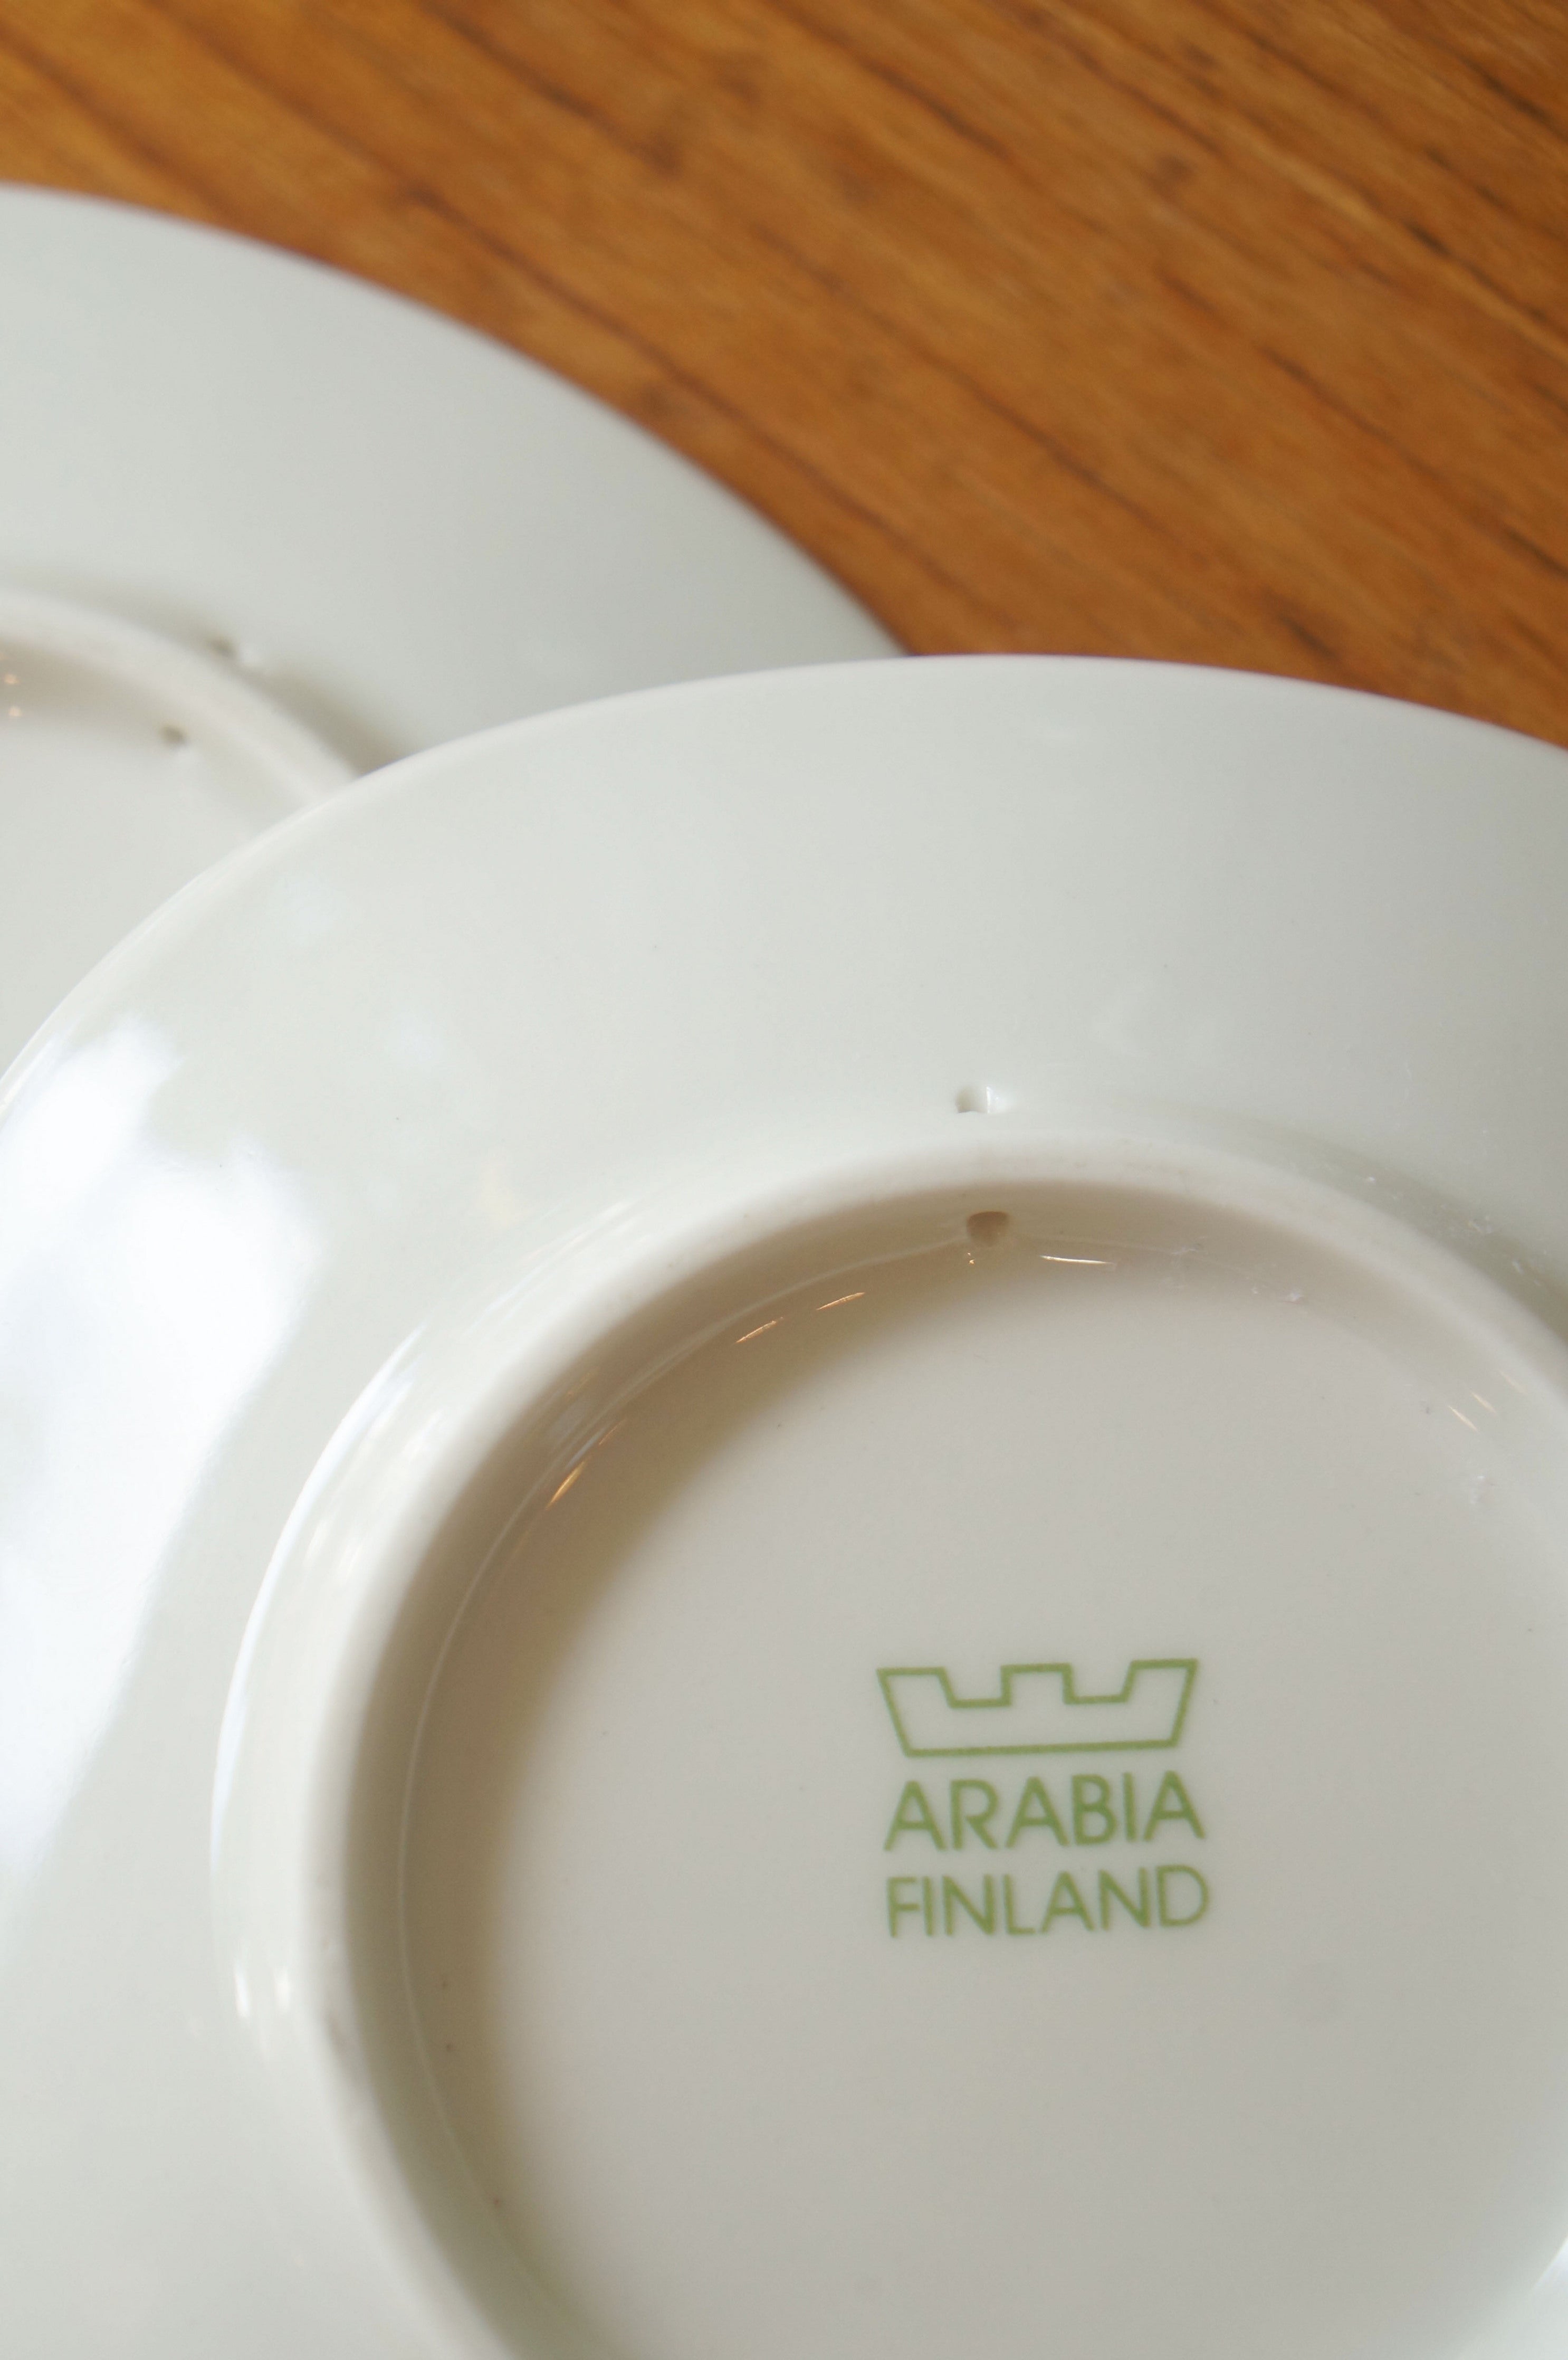 ARABIA Wall Plate Kevätkukkia Pia Rönndahl/アラビア ウォールプレート ピア・ロンダール